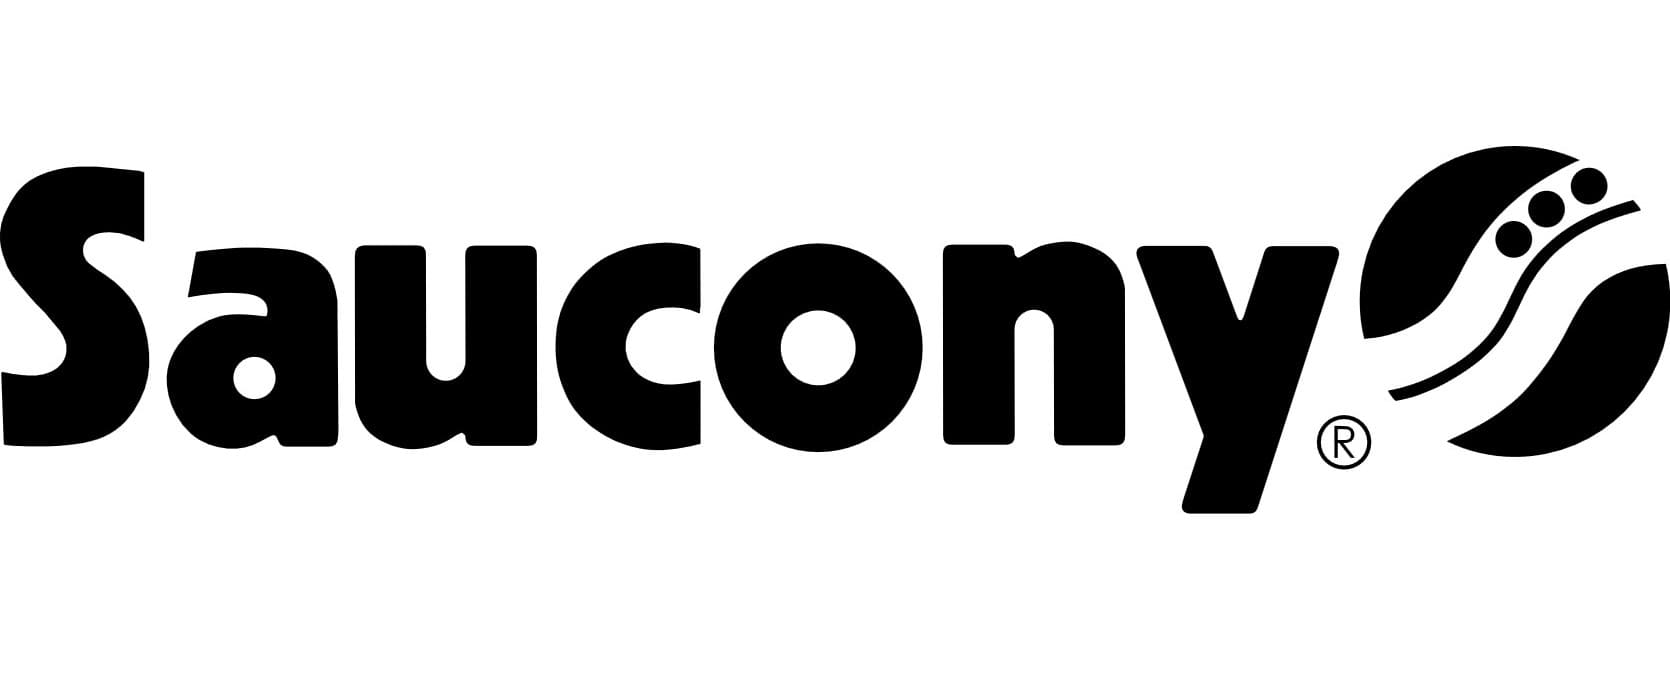 saucony logo png